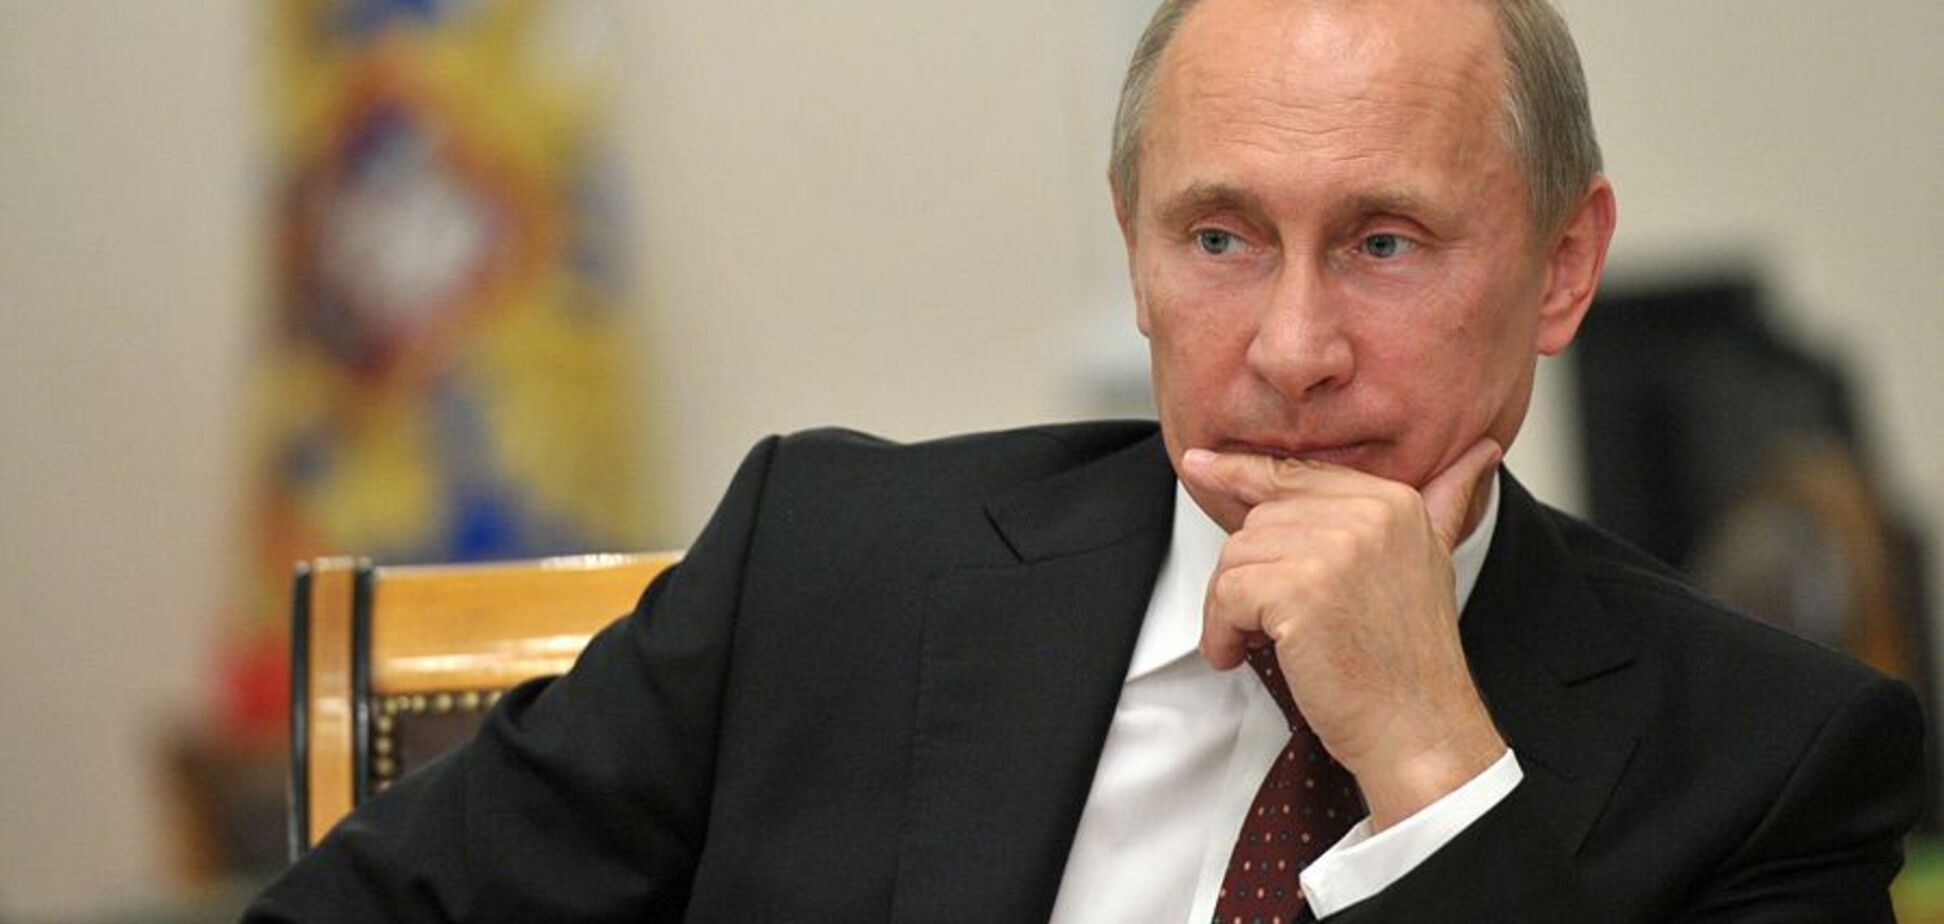 Систематически врет россиянам: в сети подловили Путина